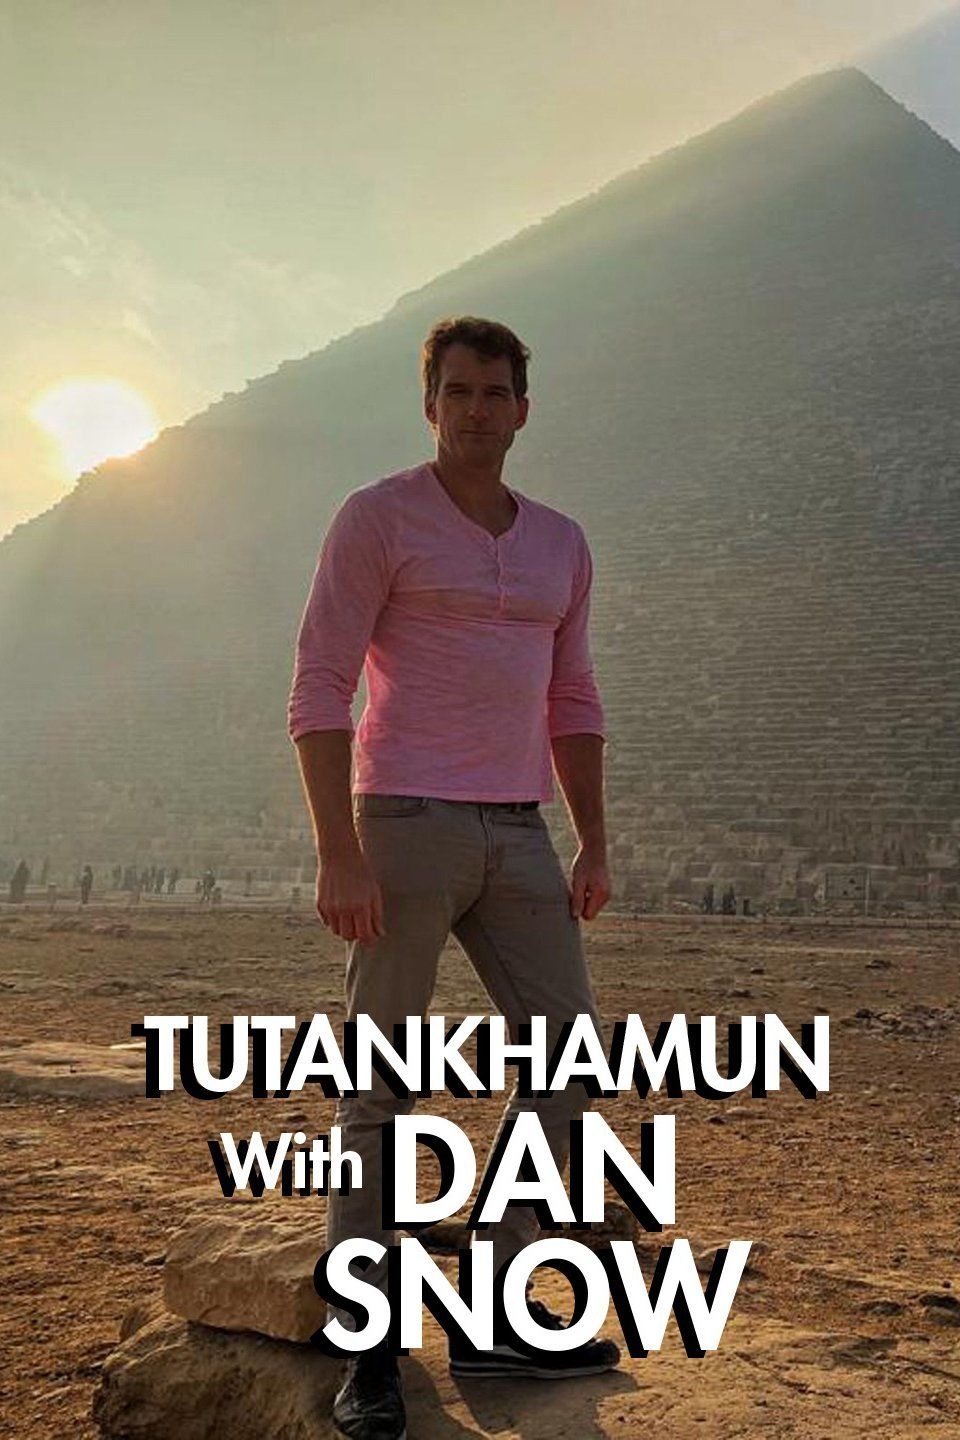 Tutankhamun with Dan Snow ne zaman